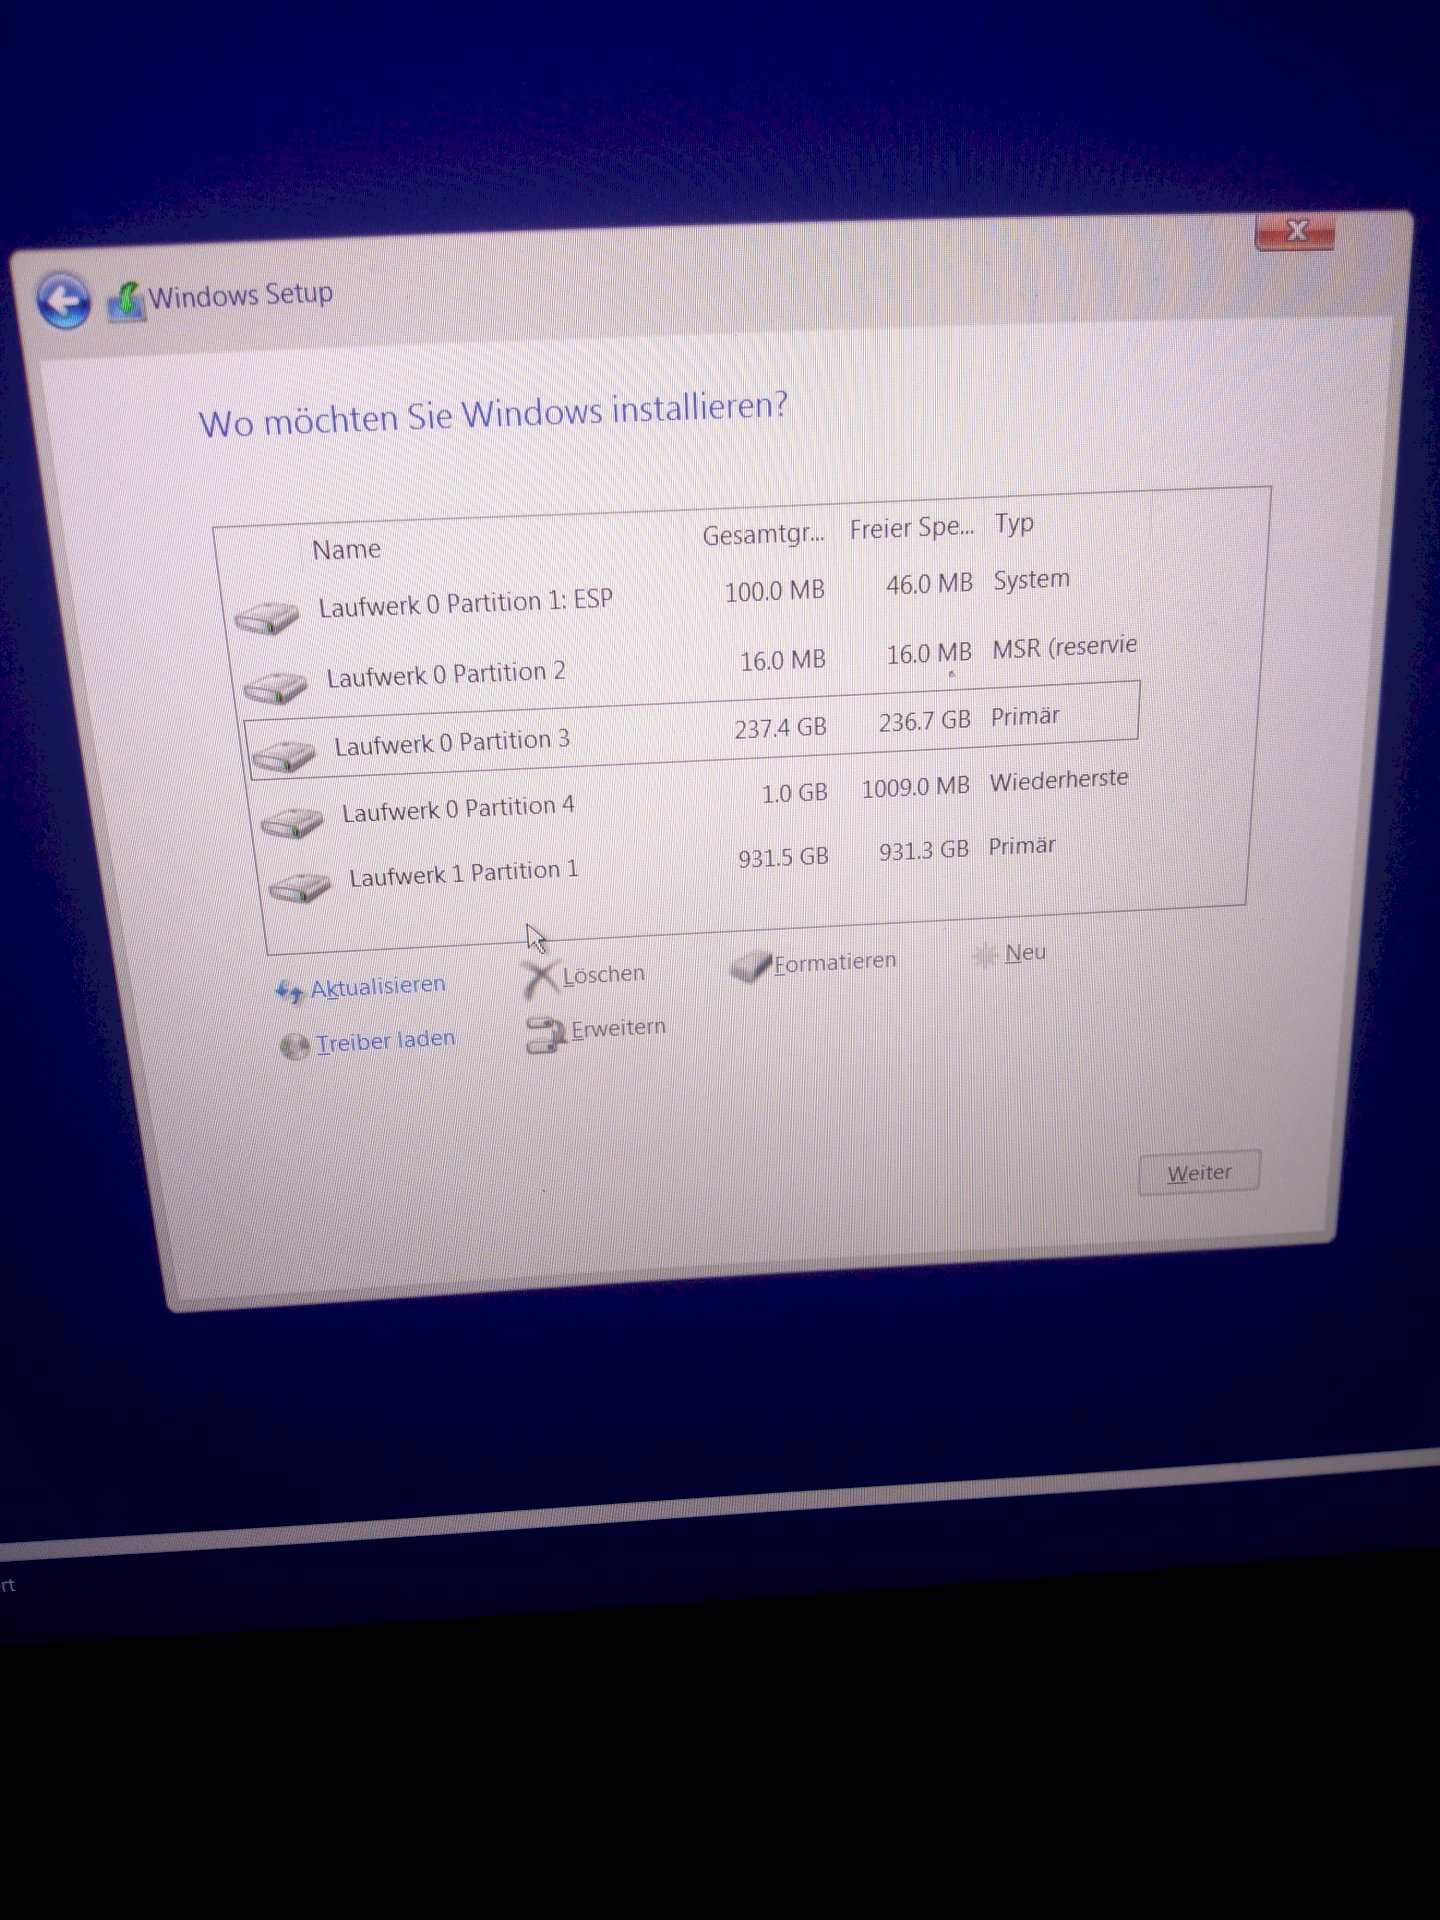 Windows 10 install error message